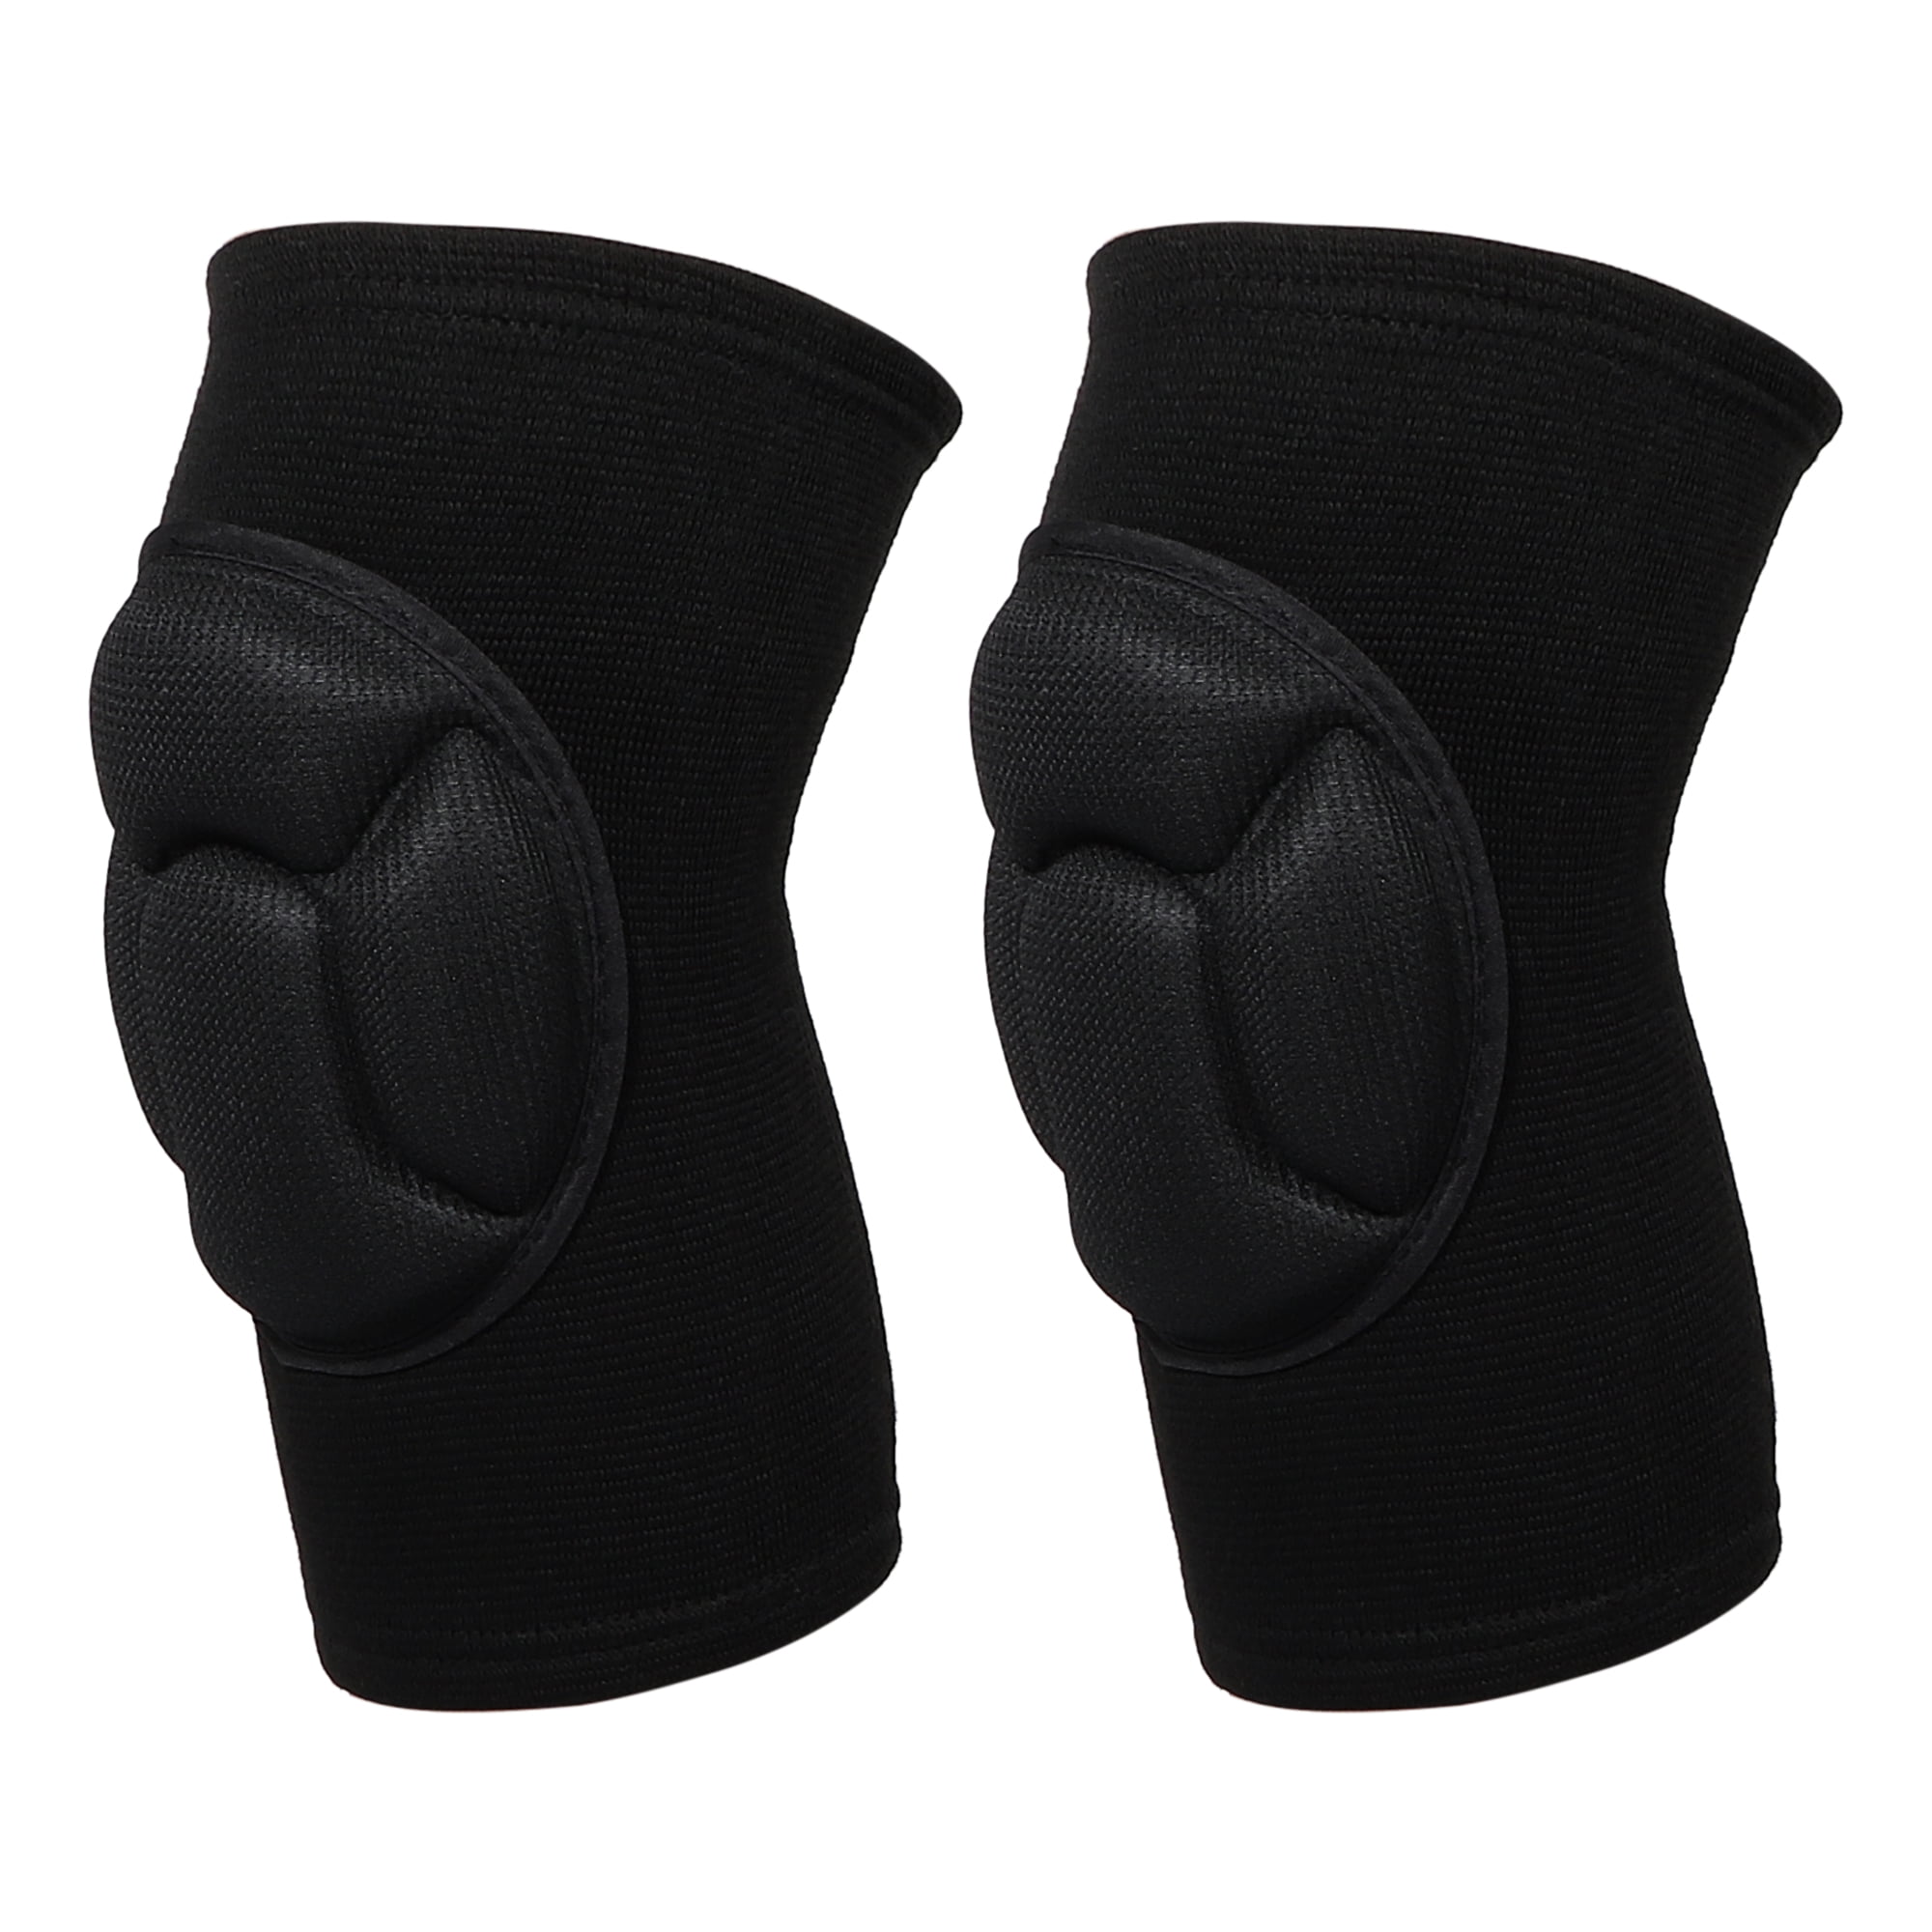 Unique Bargains 10pcs Black Cotton Stretch Sport Anti-dislocation Protect Finger Sleeve Support